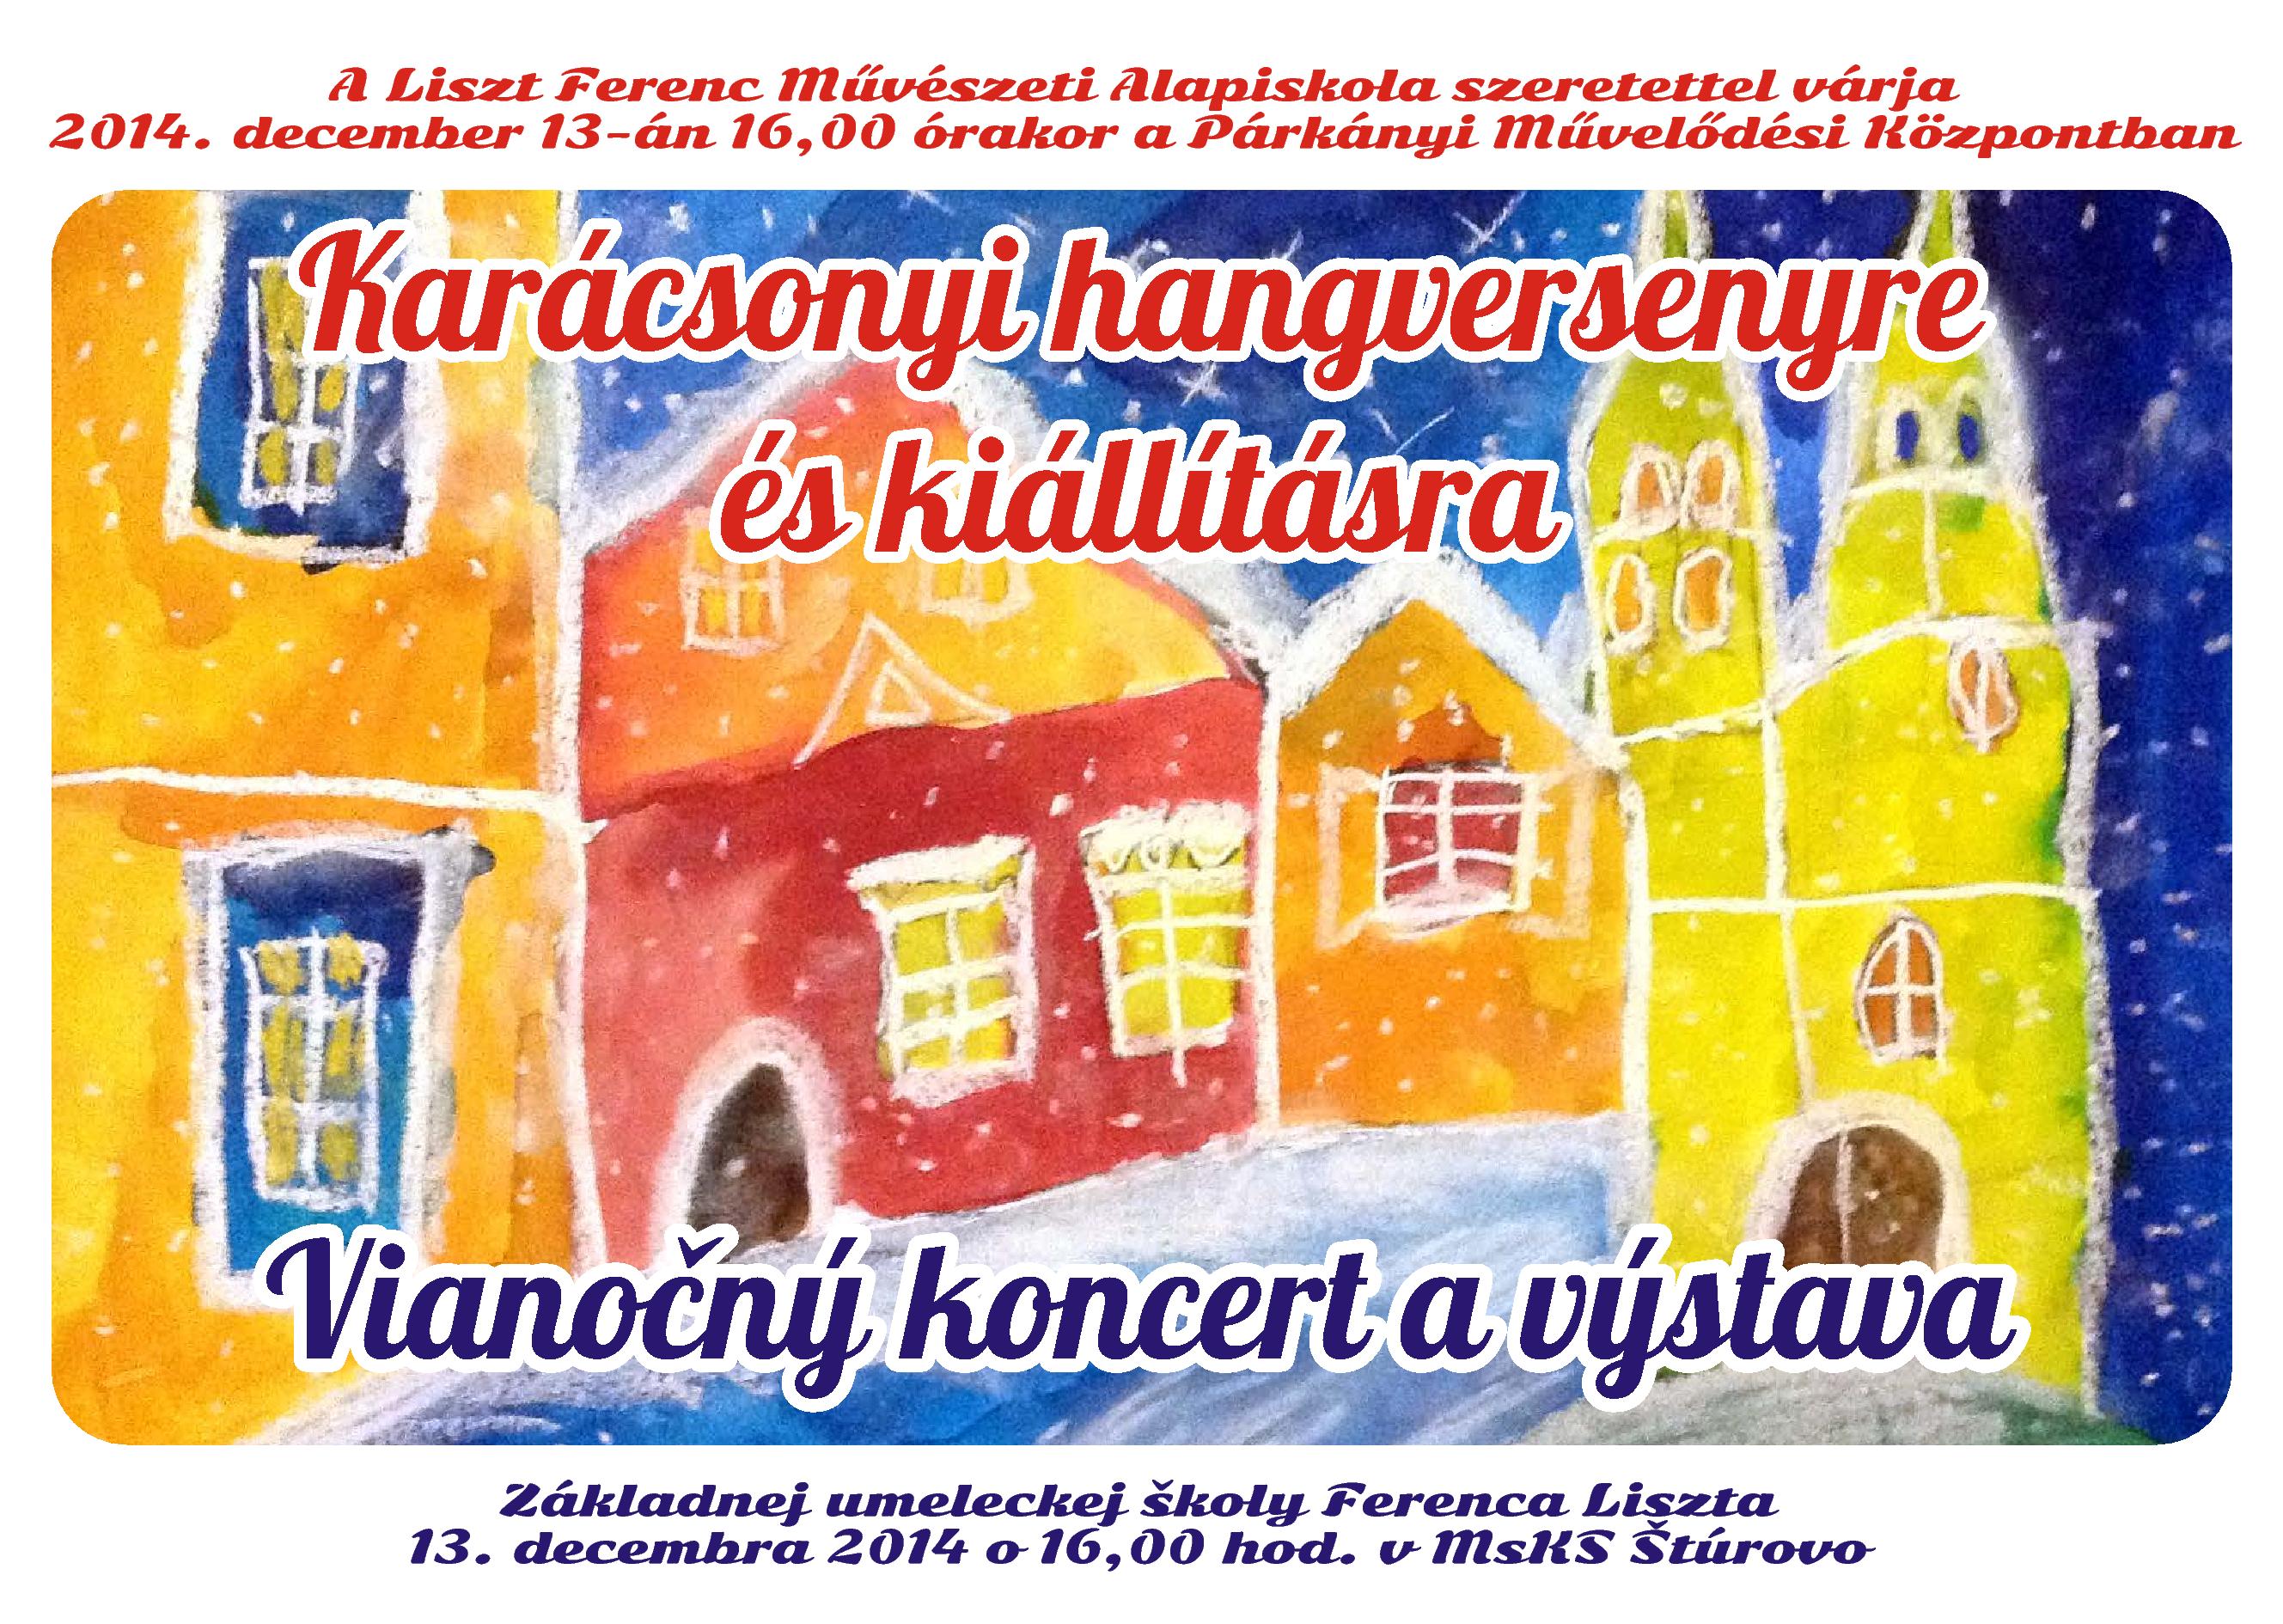 karacsonyi-hangverseny-plakat-2014-page-001